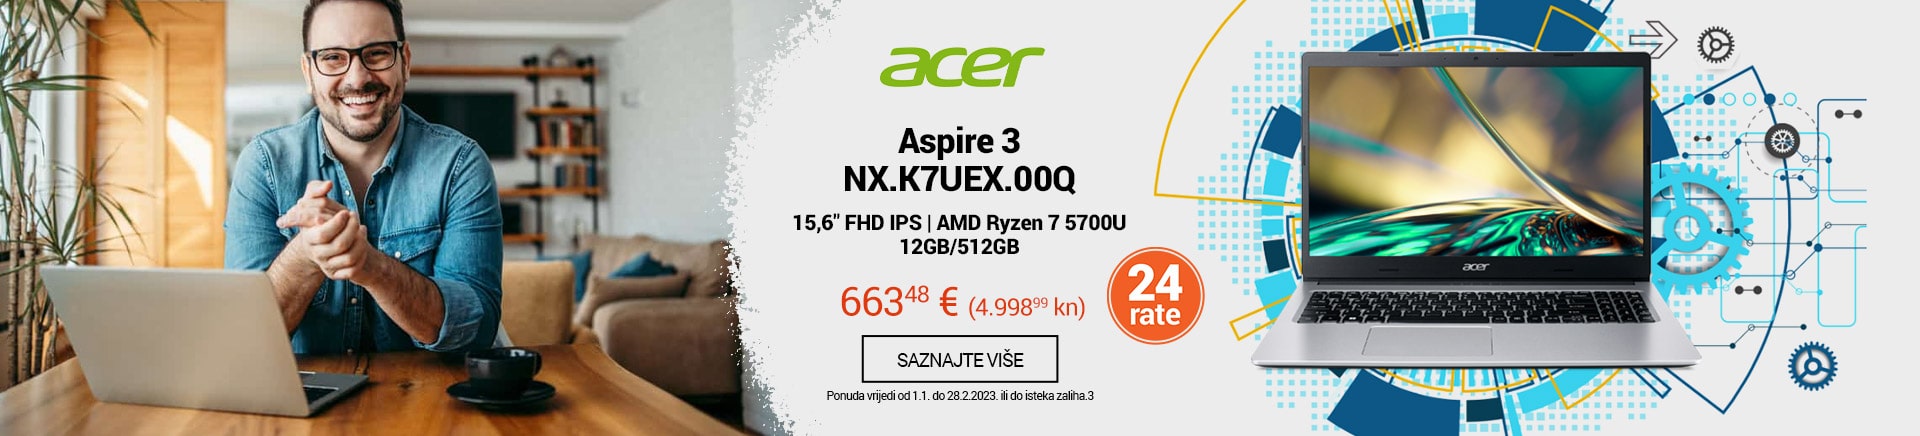 HR Acer Aspire 3 NX K7UEX 00Q 2 MOBILE 380 X 436-min.jpg